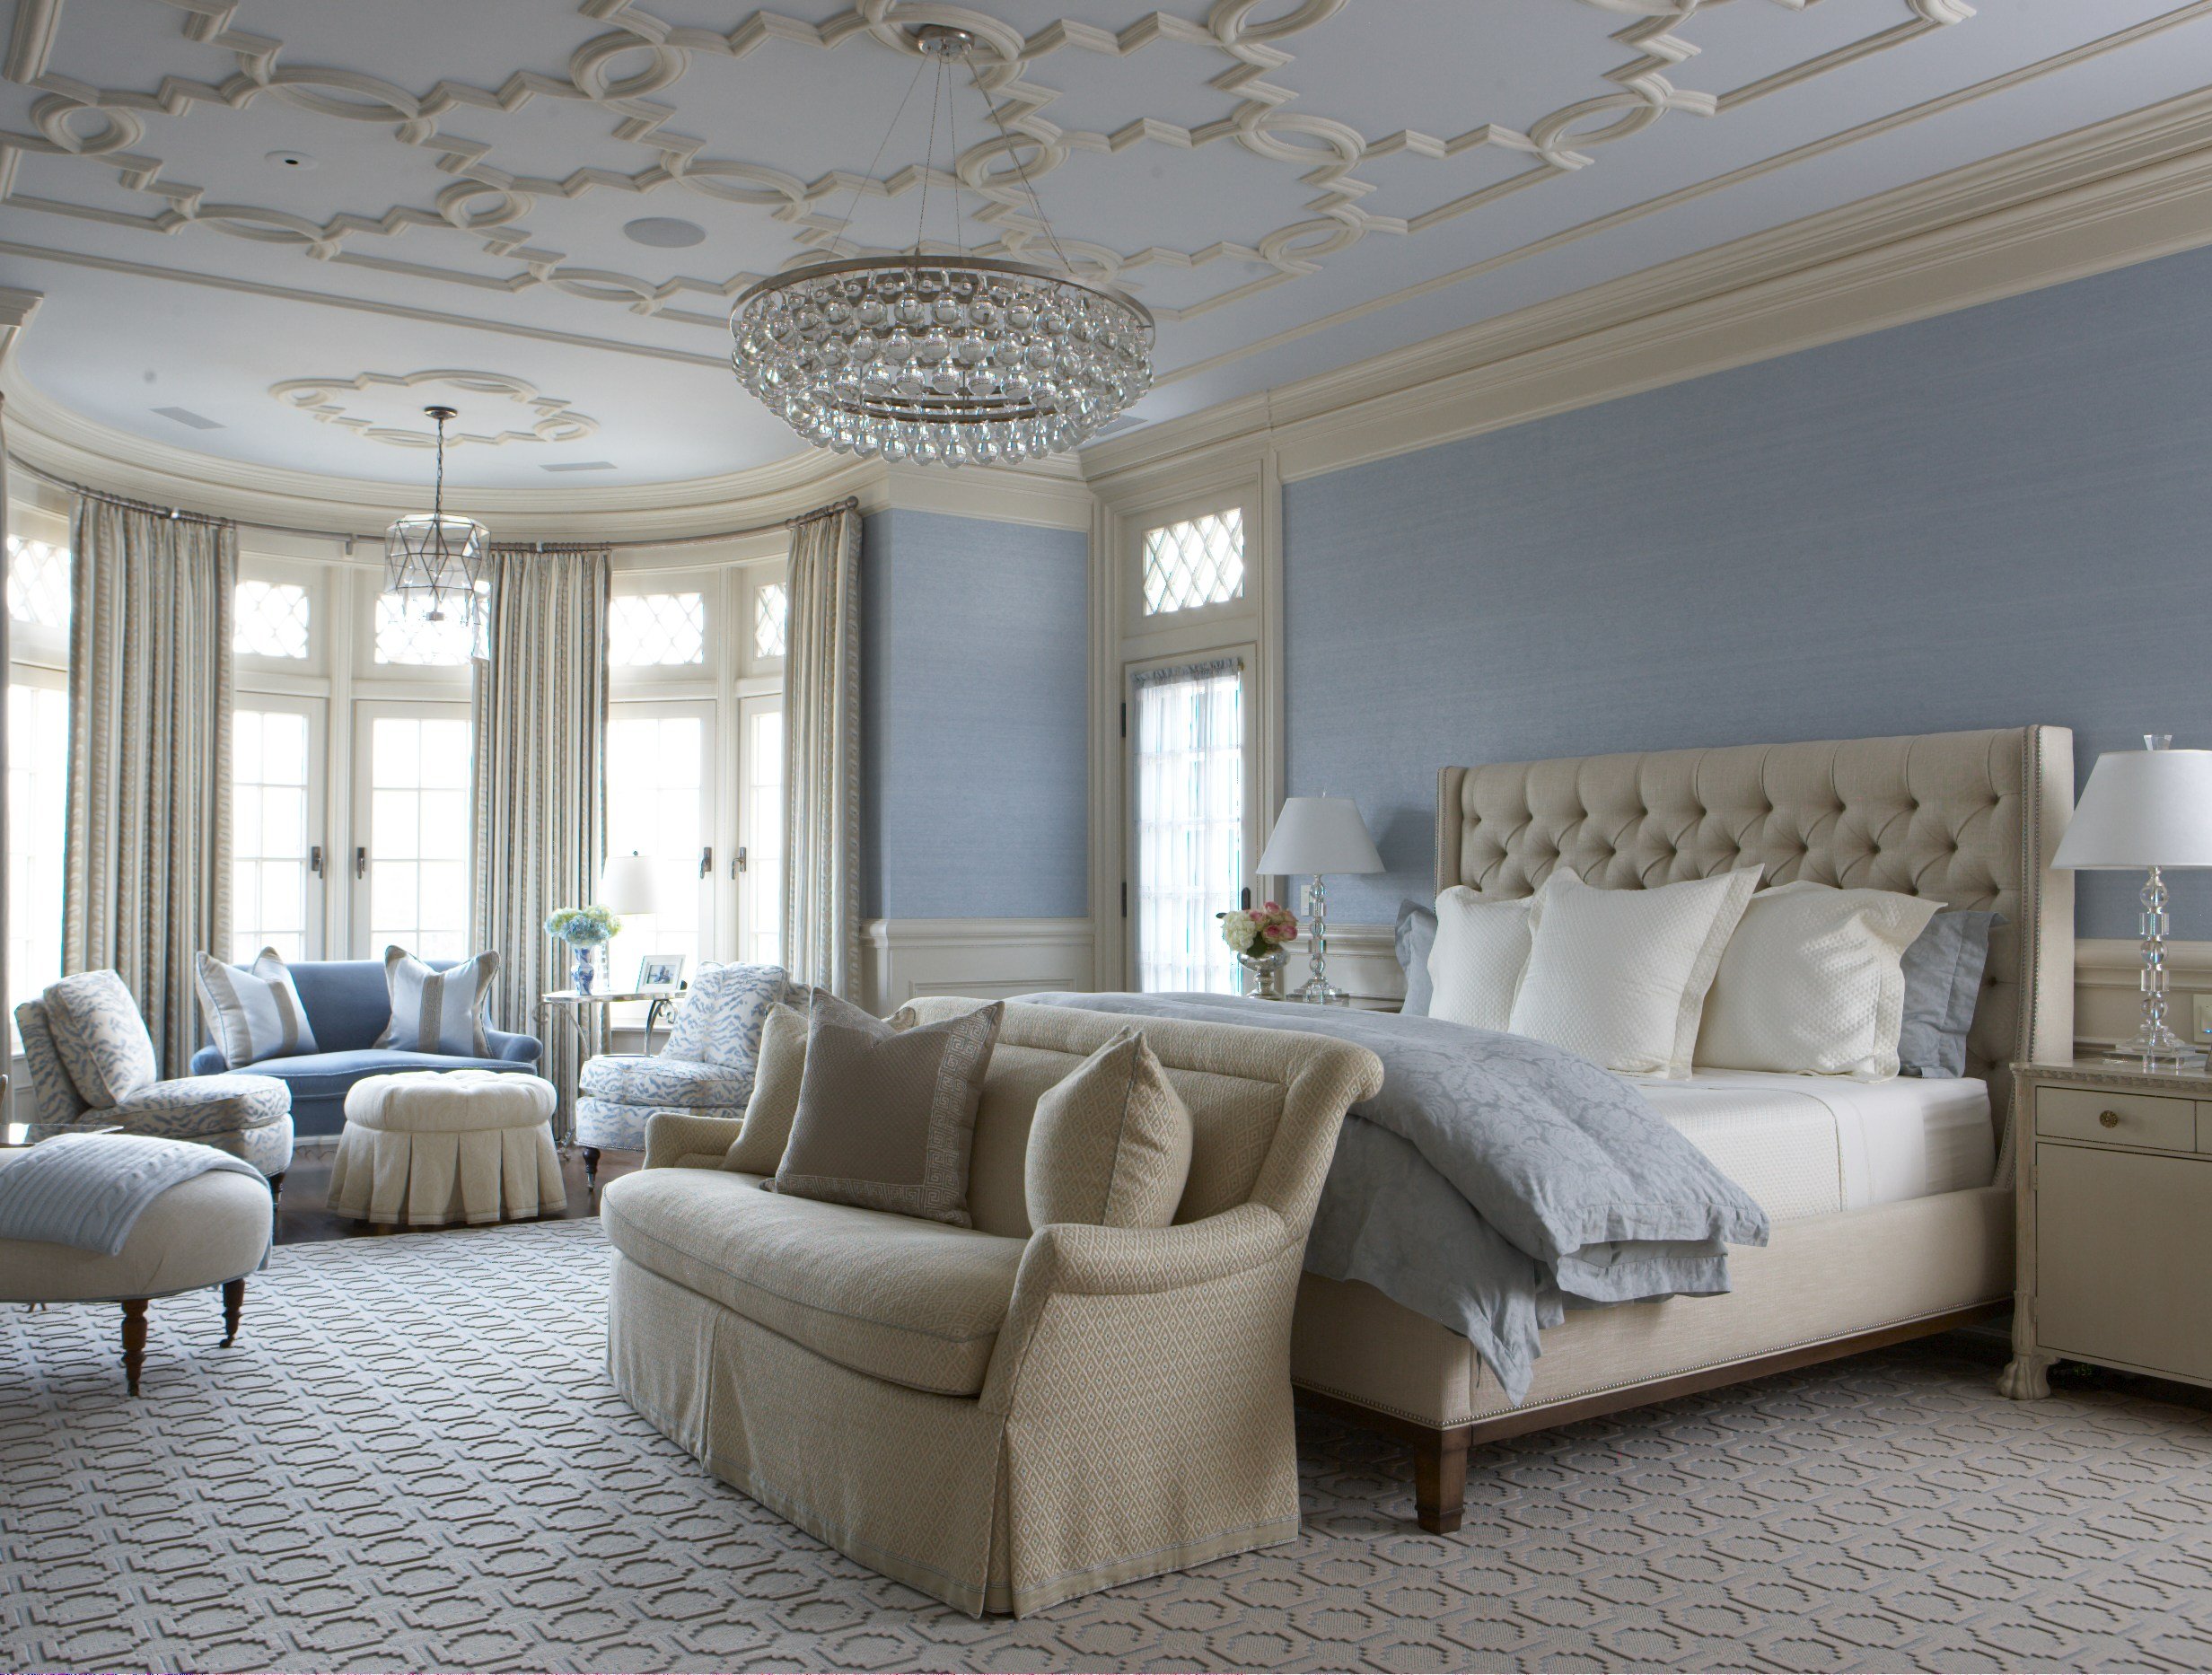 22-dreamy-cream-blue-bedroom-textured-cieling-glass-chandelier-fixtures-beautiful-lighting-jacobean-country-house-rinfret-interior-designs.jpg